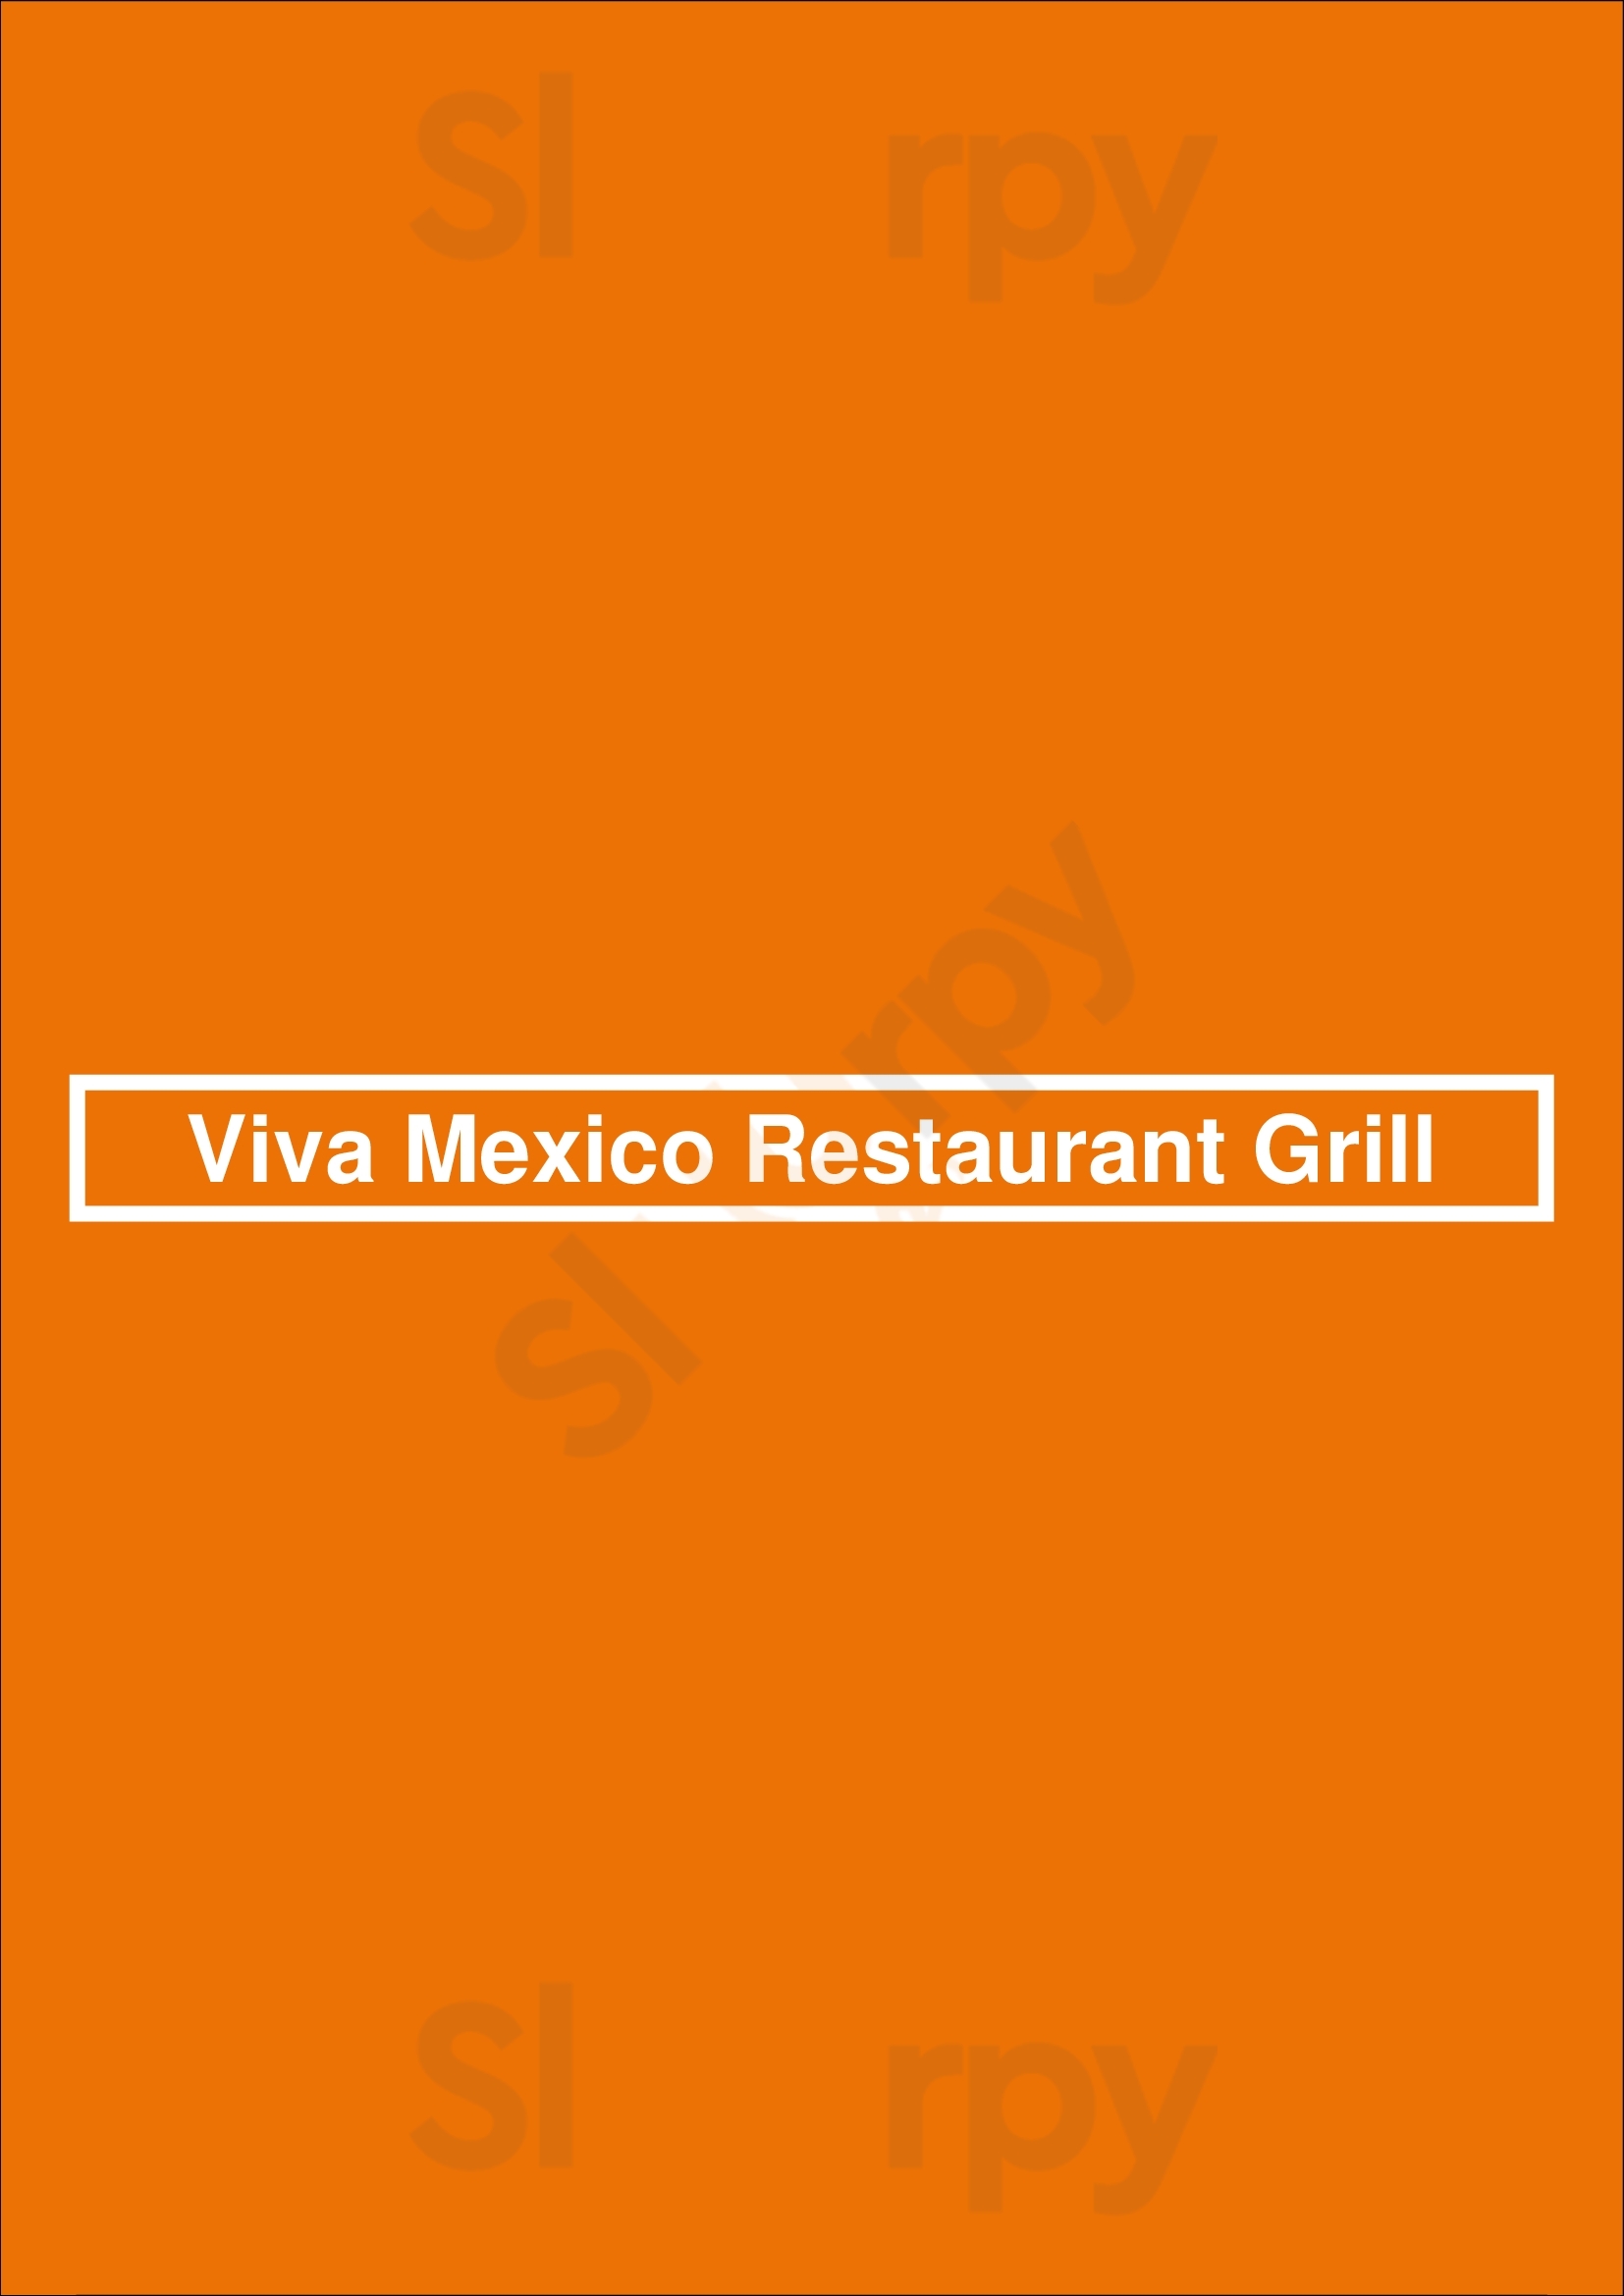 Viva Mexico Restaurant Grill Langley City Menu - 1